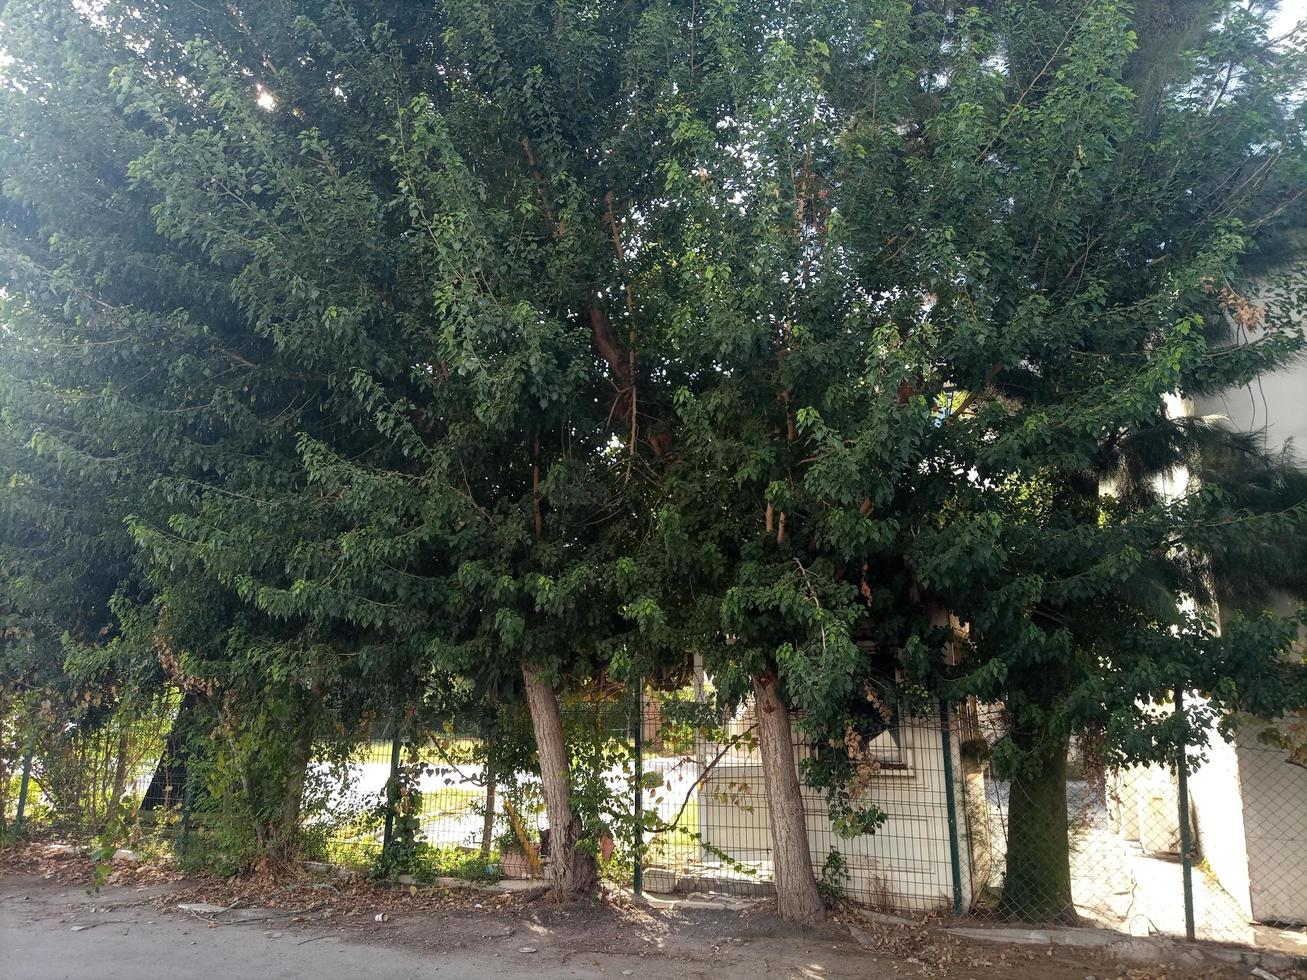 arbres dans la rue photo